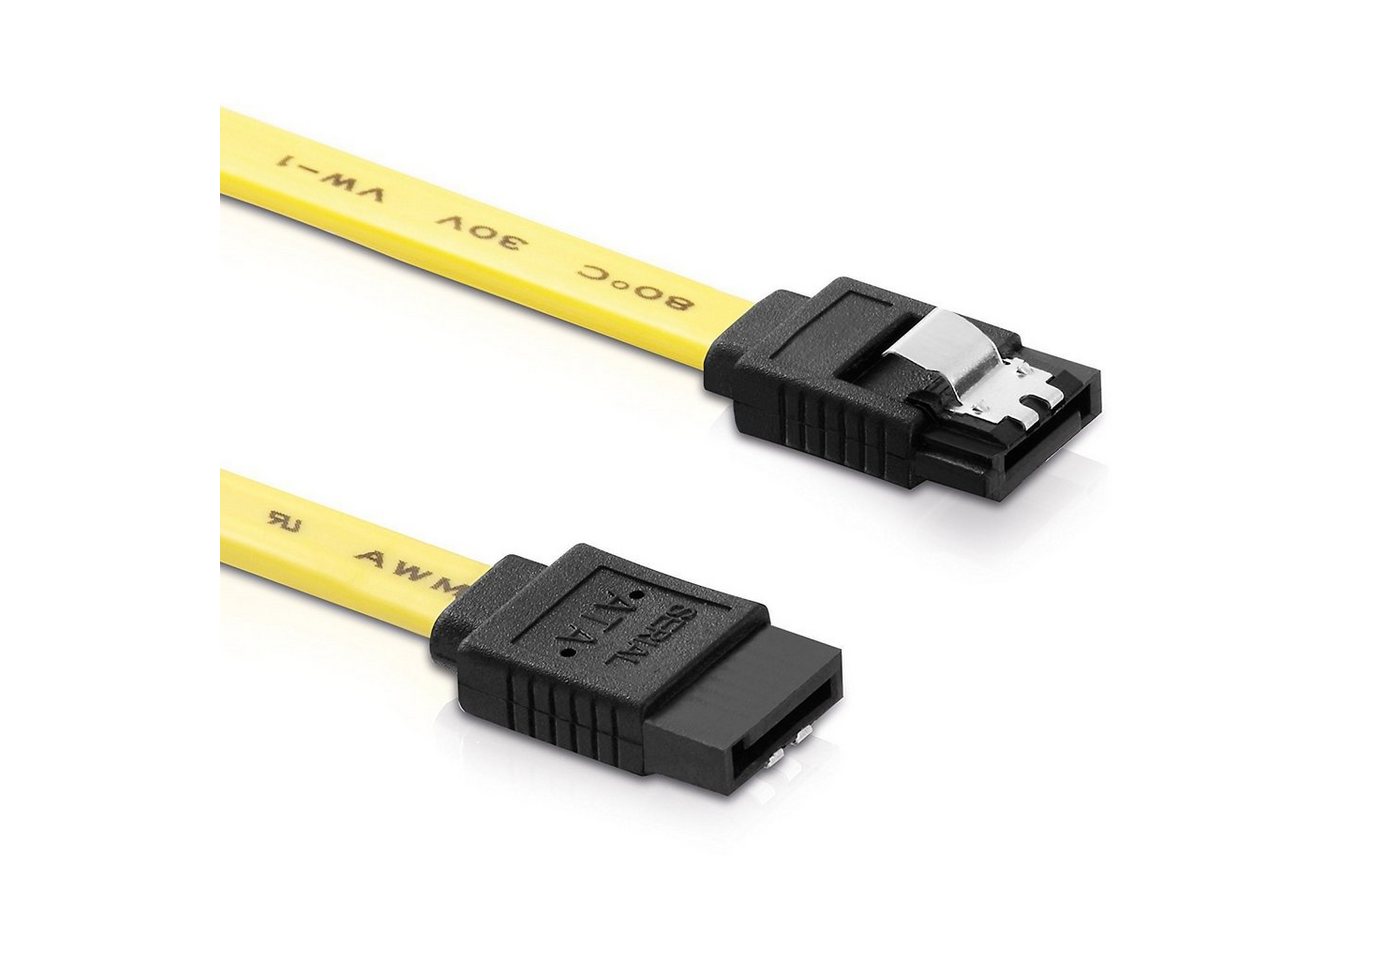 adaptare adaptare 31203 30 cm SATA-Kabel 6 GB/s mit Metall-Clip gelb Computer-Kabel von adaptare